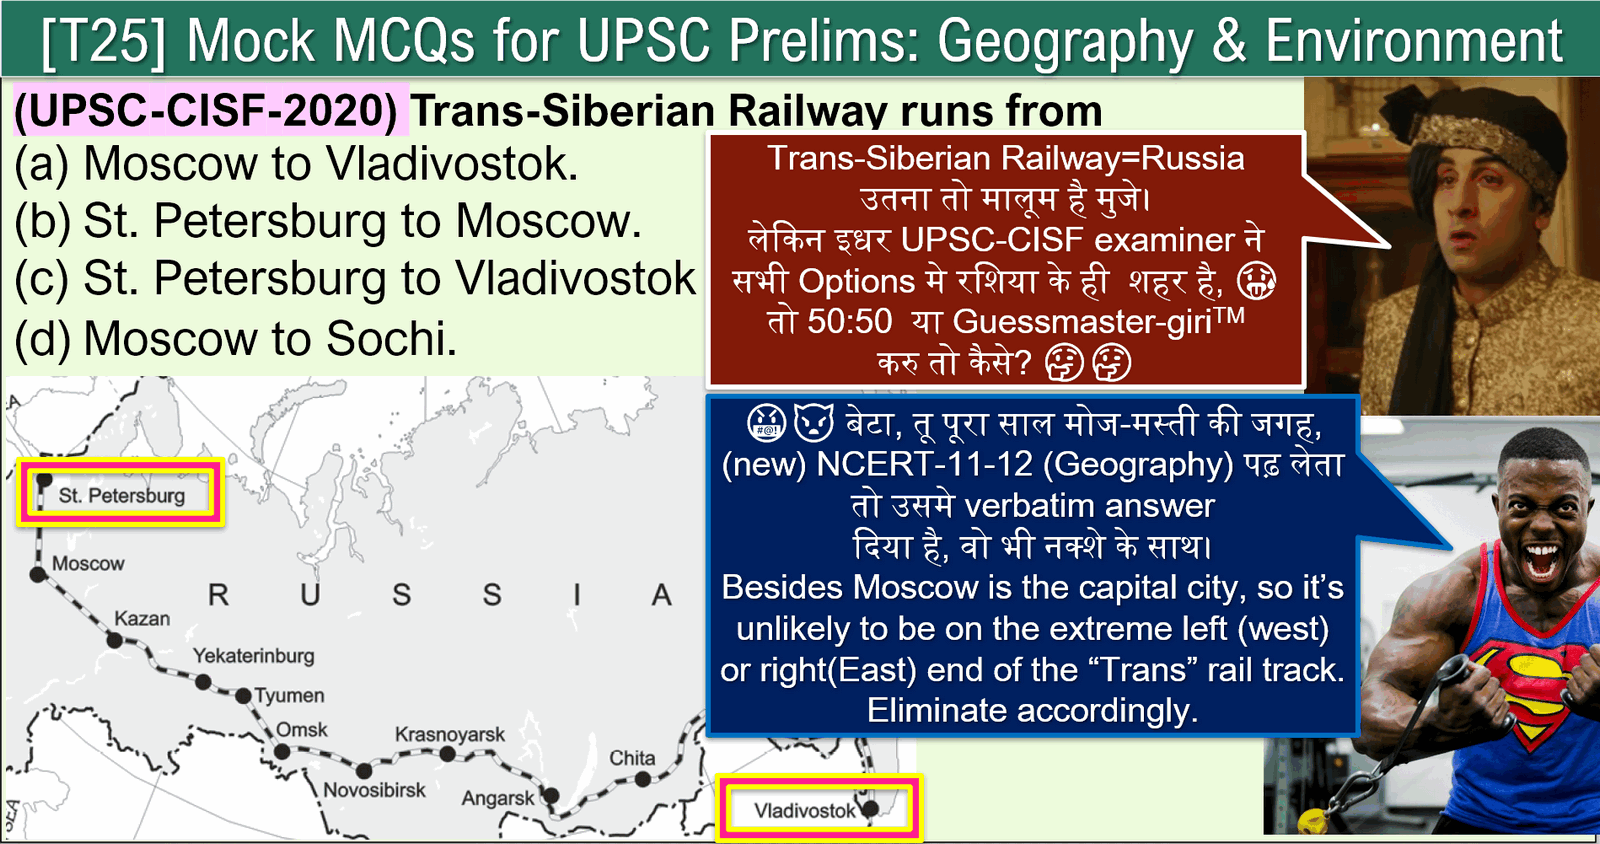 The Trans-Siberian Railway runs from (UPSC-CISF-2020)